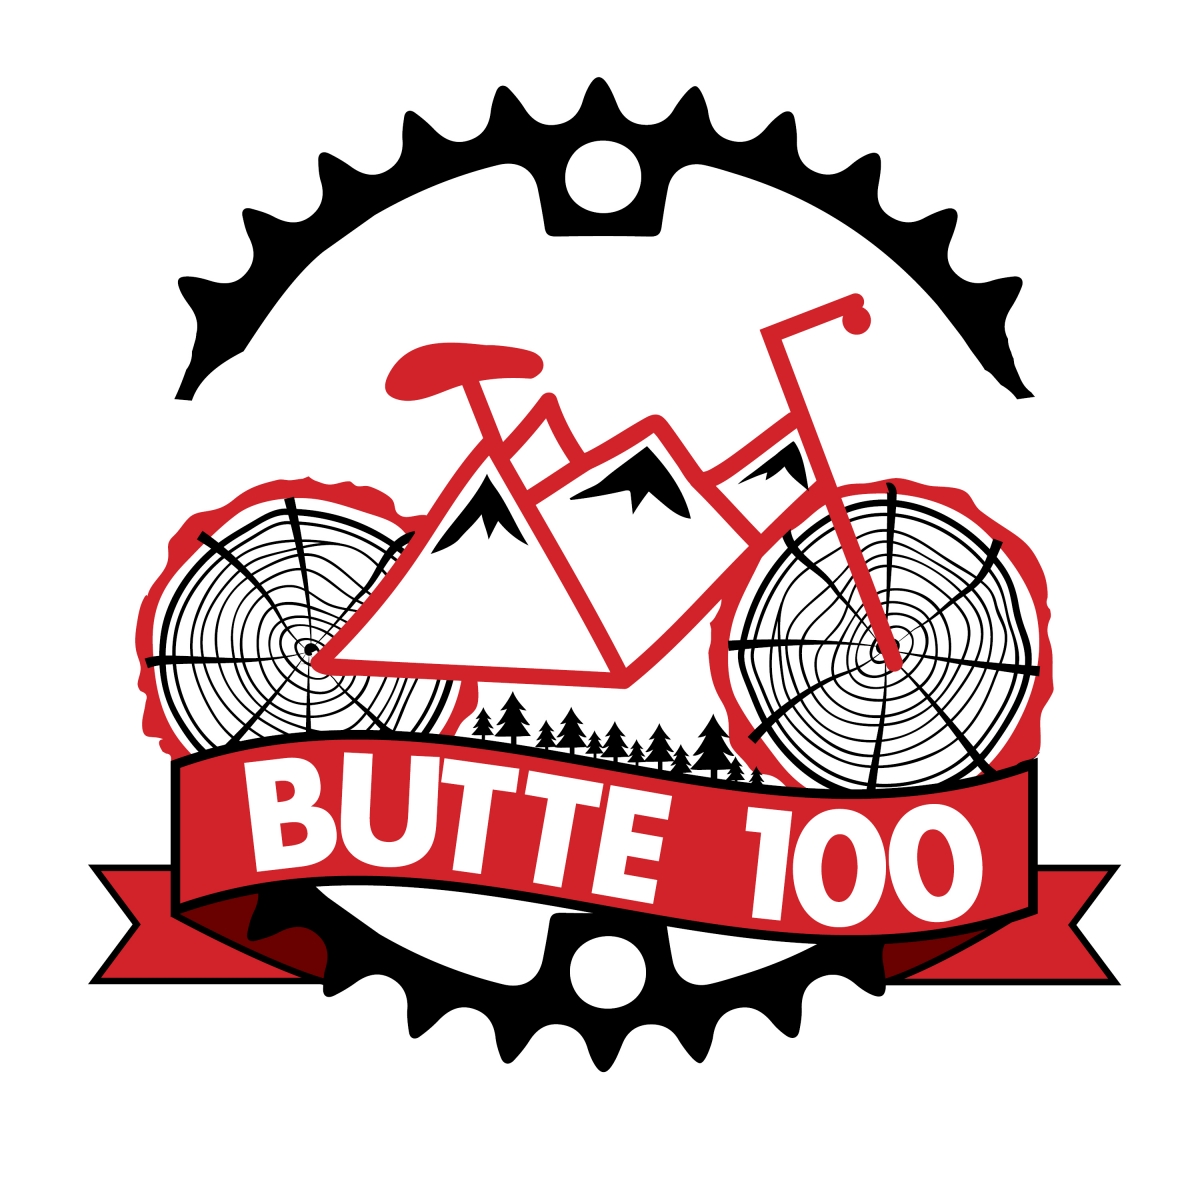 Butte 100 Mountain Bike Races